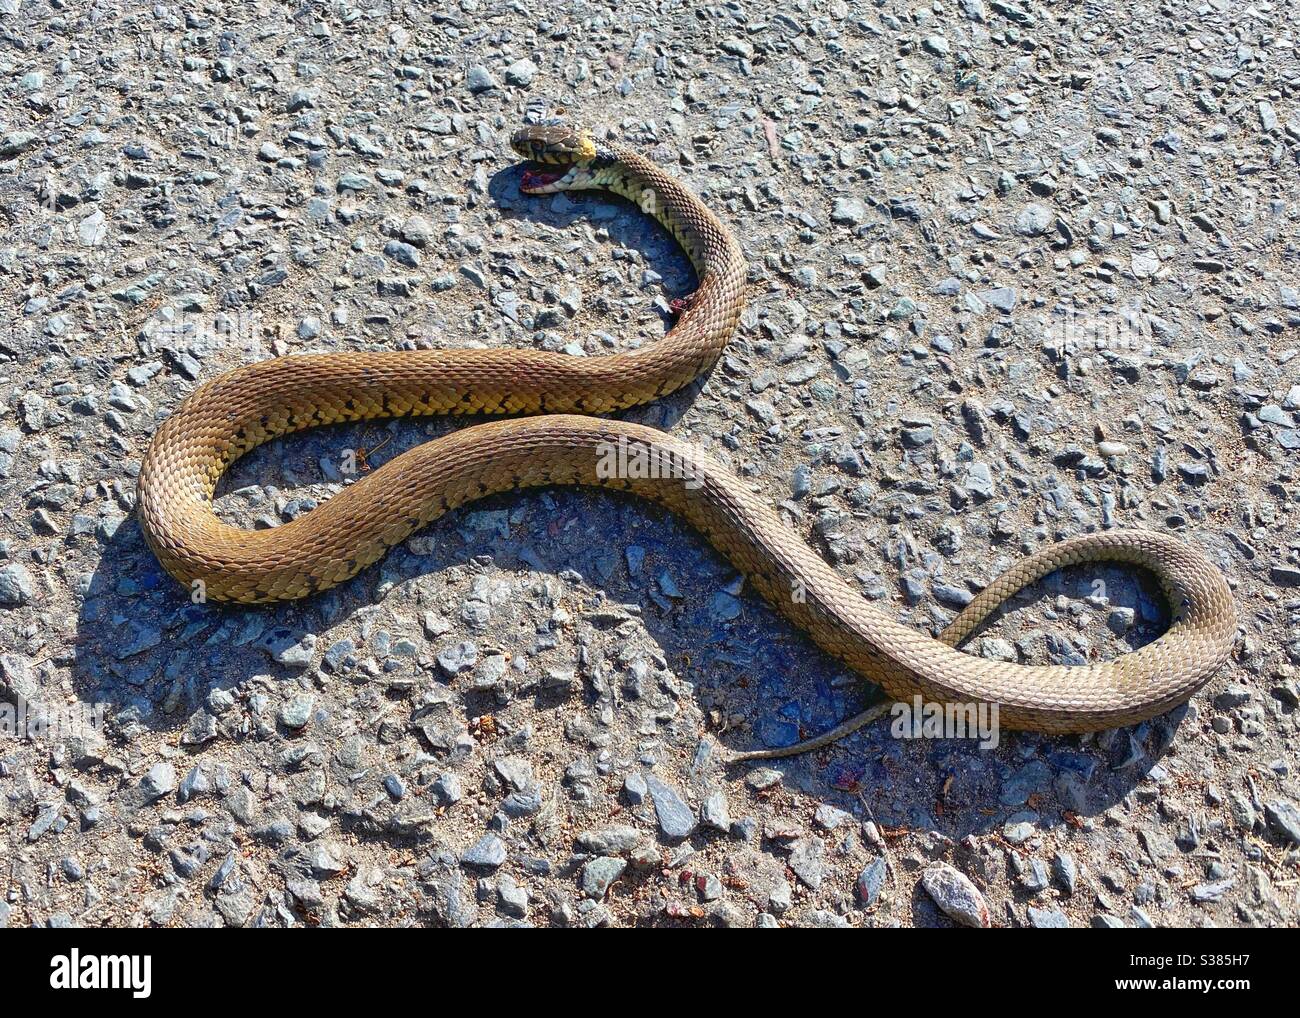 Dead grass snake on road Stock Photo